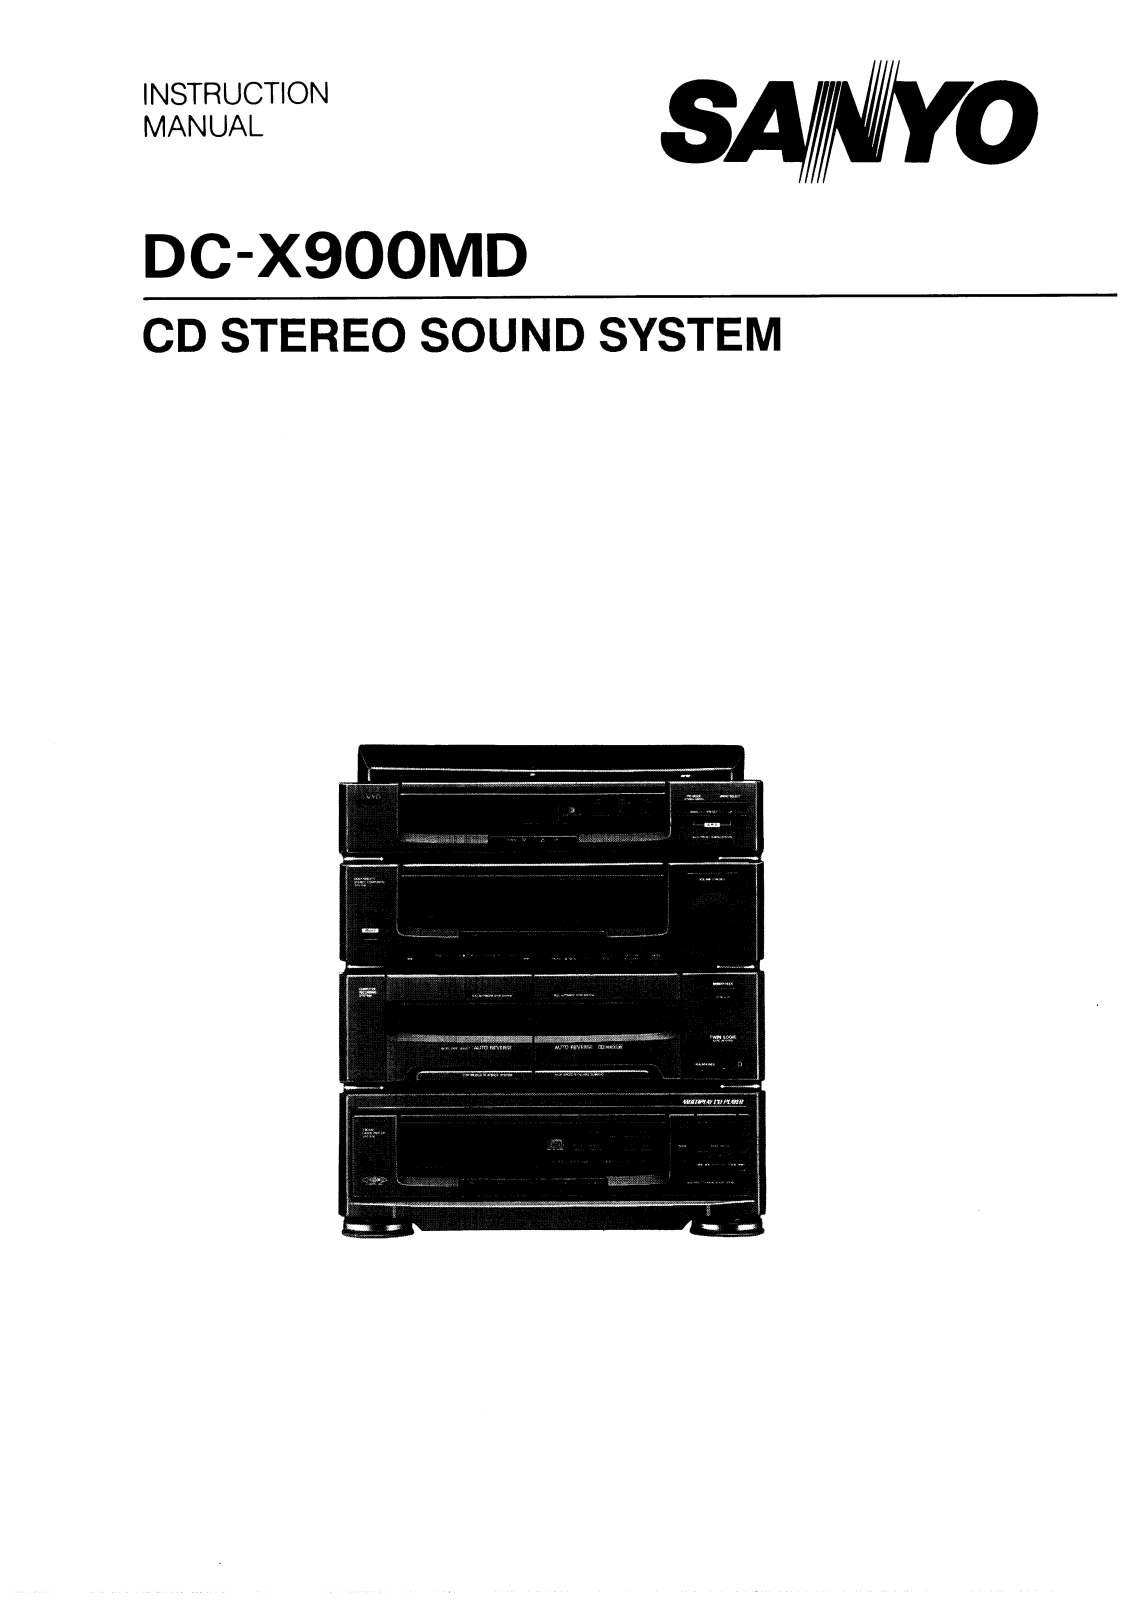 Sanyo DC-X900MD Instruction Manual